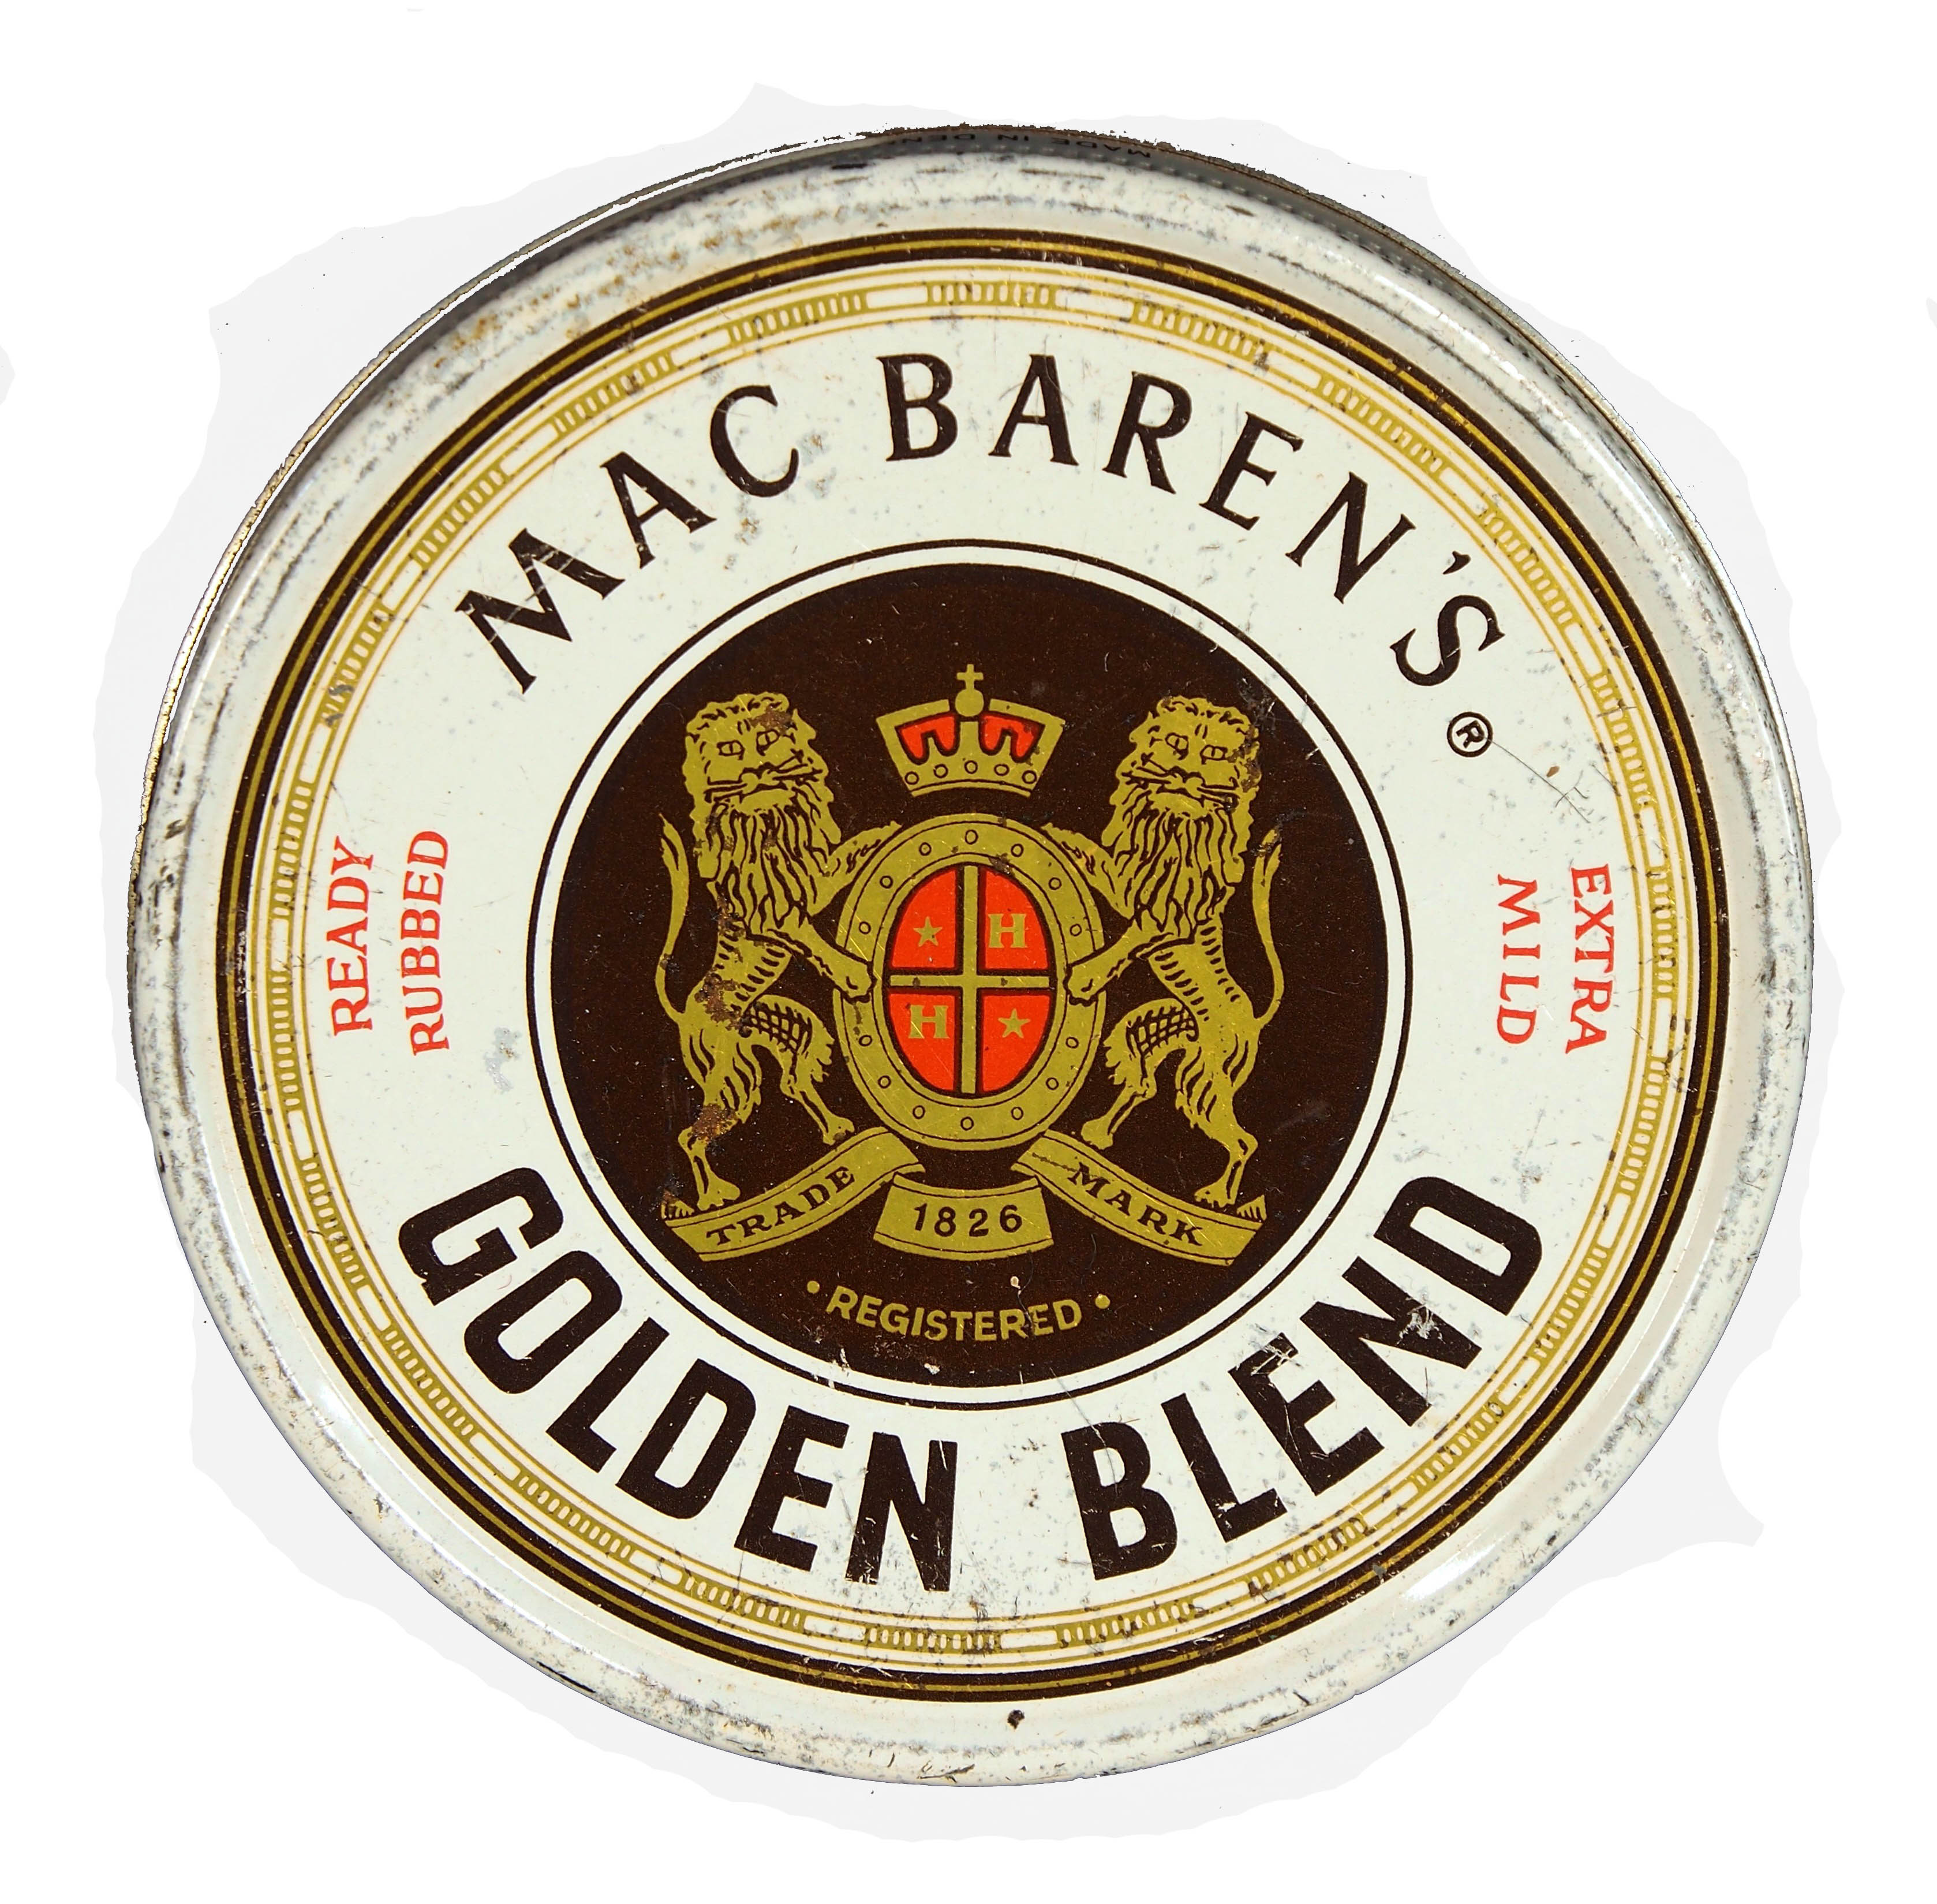 Mac Barens Golden Blend tobacco tin